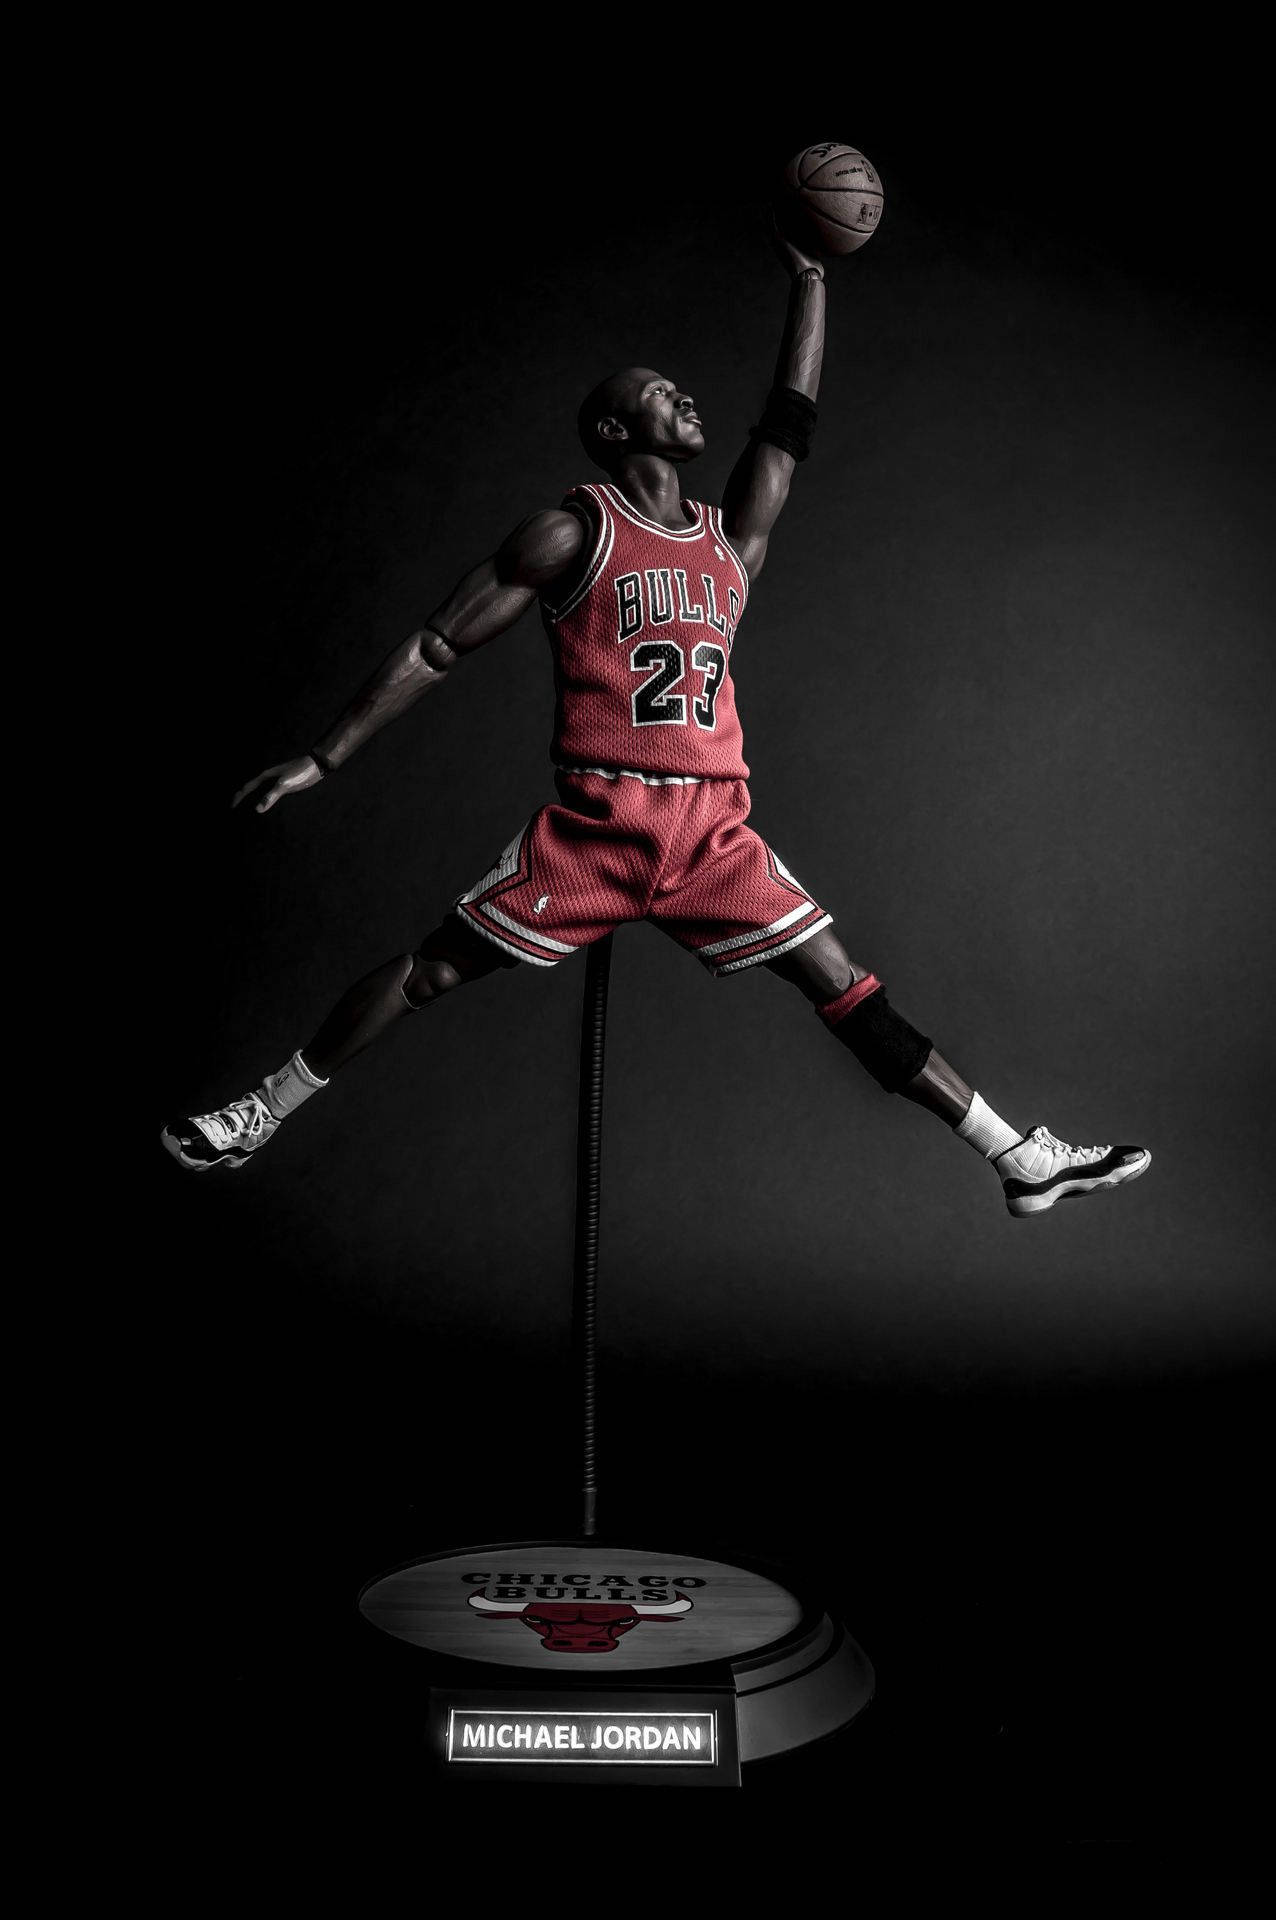 Cool Michael Jordan Action Figure Background